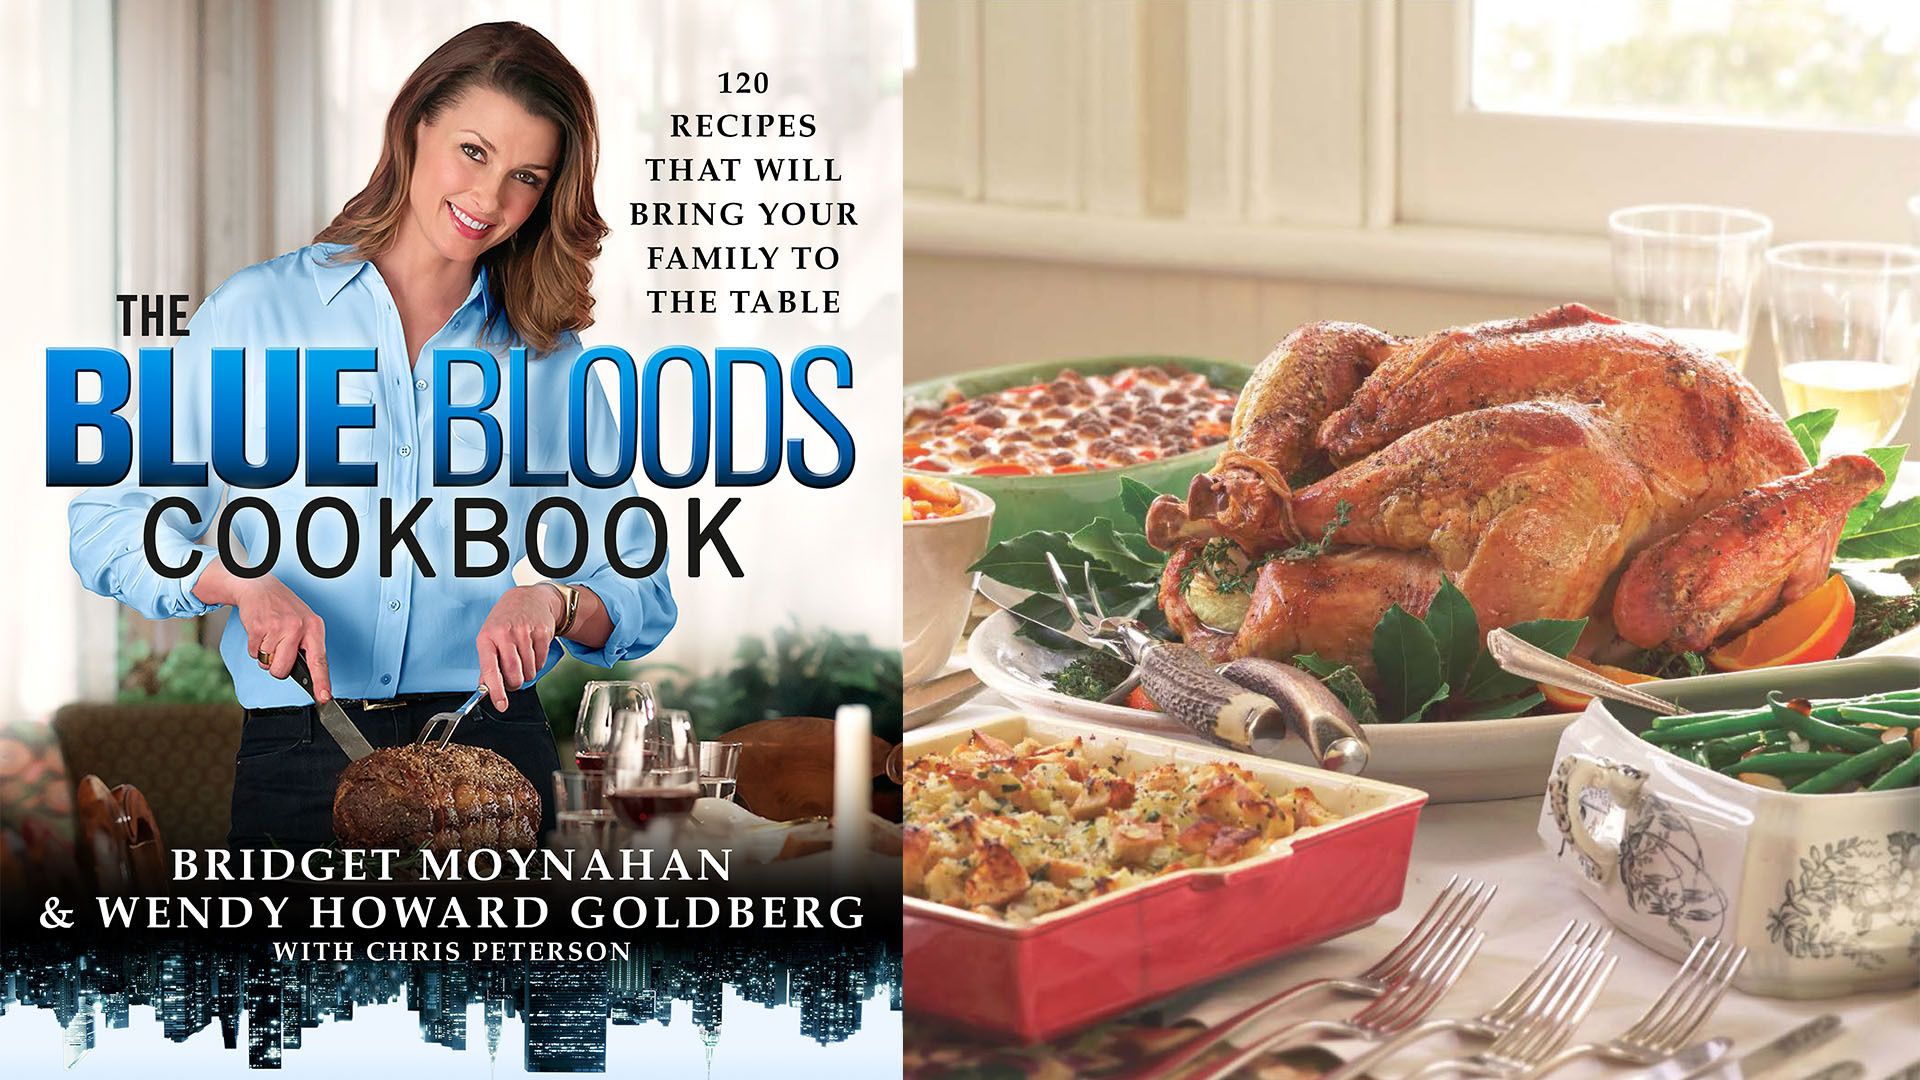 Bridget Moynahan's Blue Bloods cookbook and a thanksgiving turkey dinner.